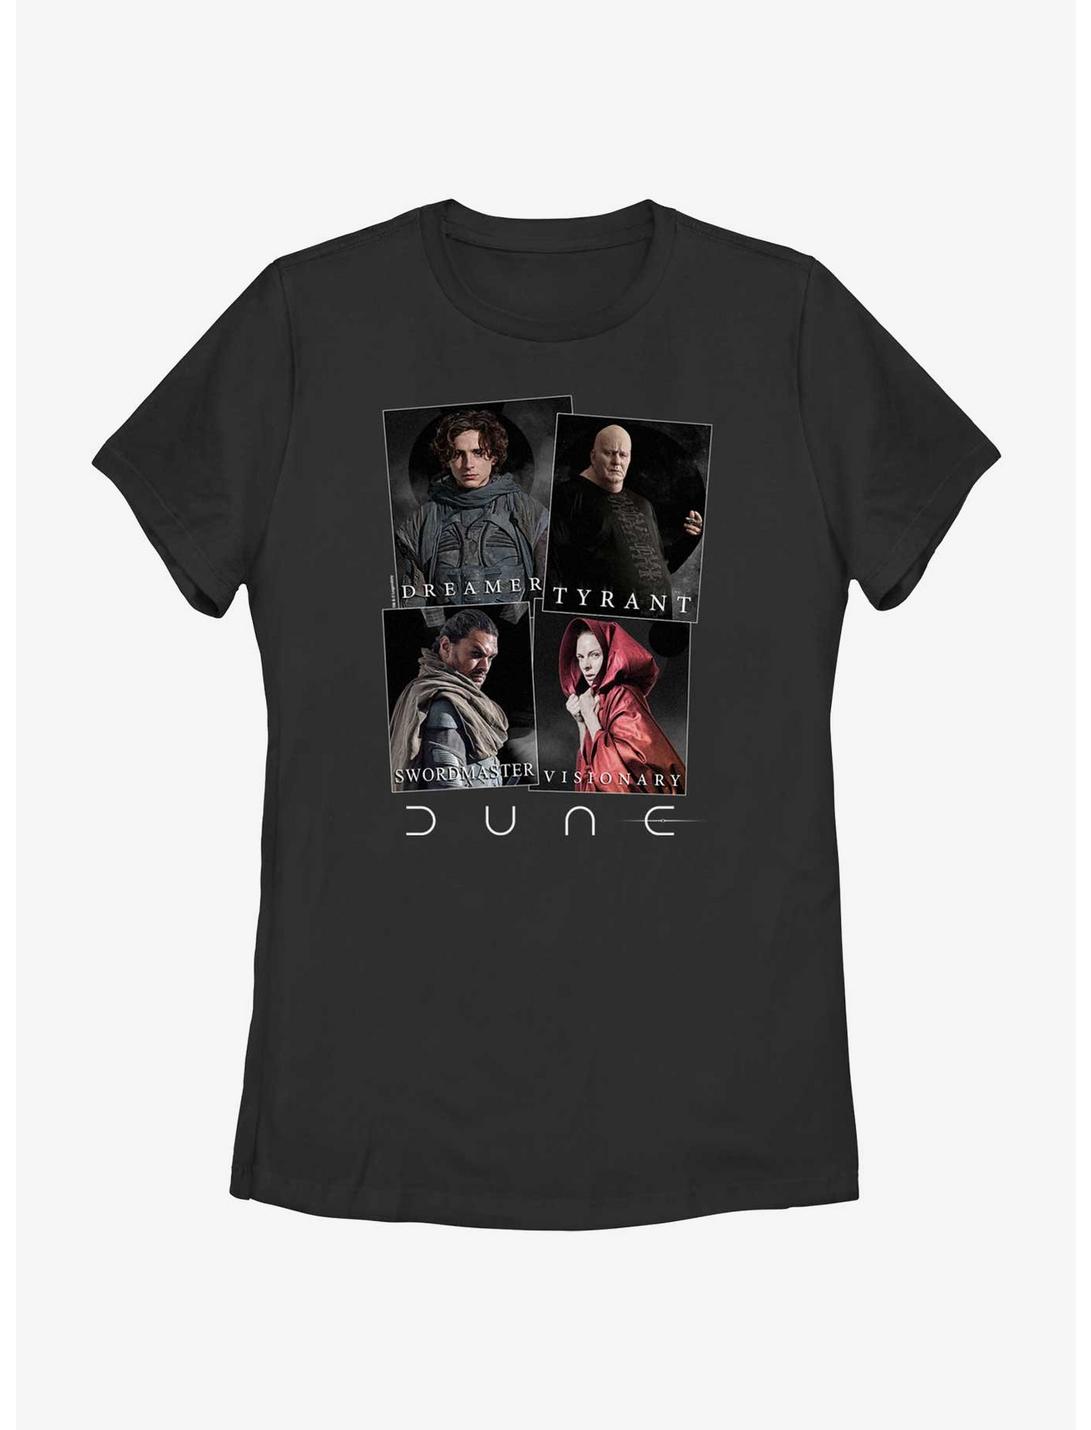 Dune: Part Two Dreamer Tyrant Sword Master Visionary Womens T-Shirt, BLACK, hi-res